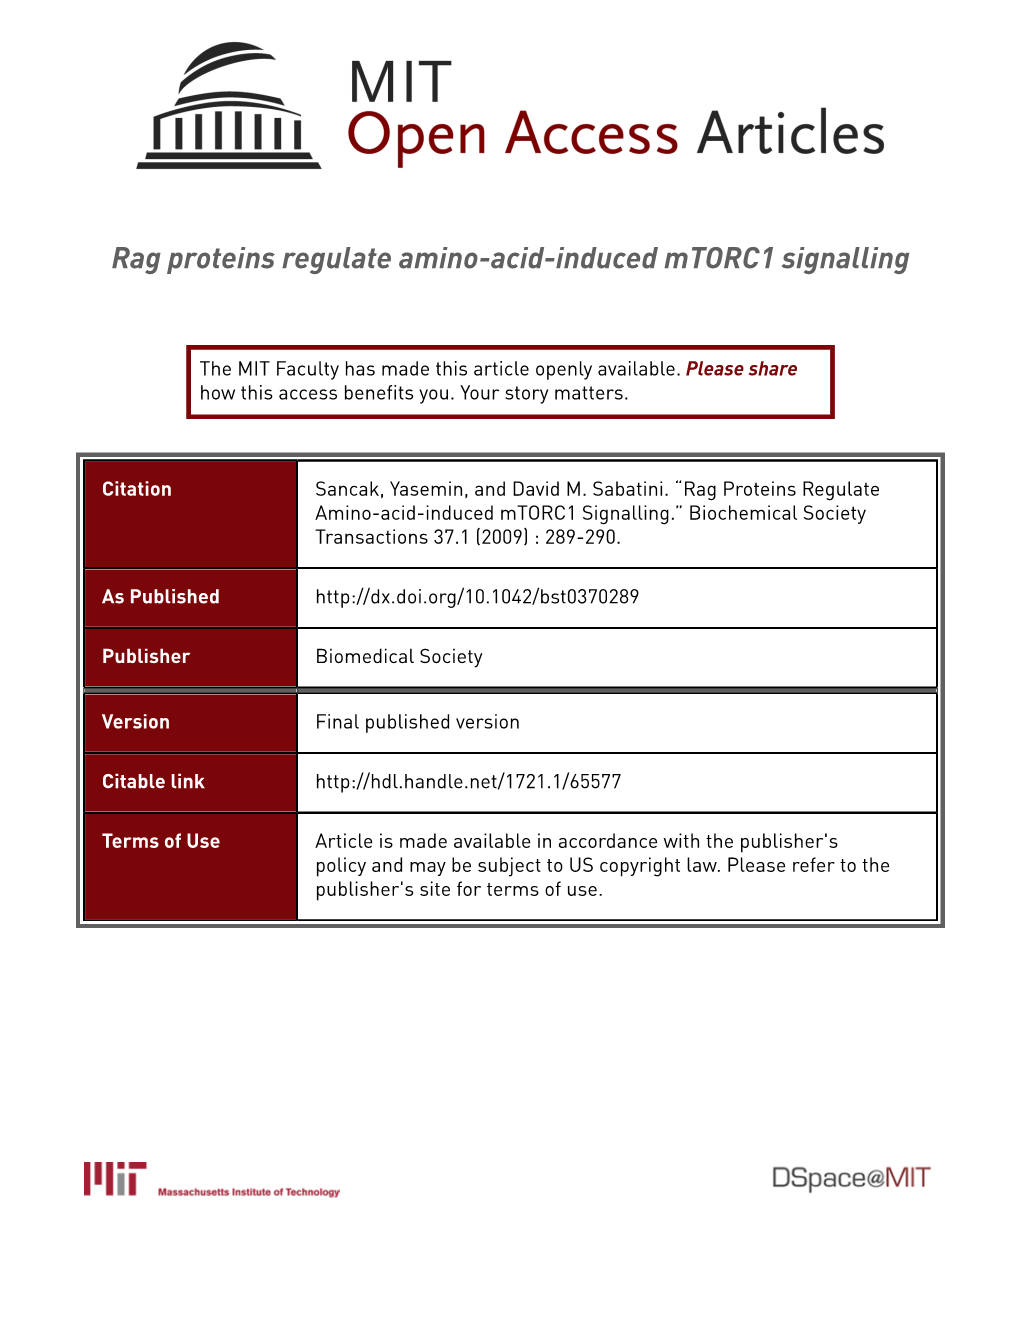 Rag Proteins Regulate Amino-Acid-Induced Mtorc1 Signalling